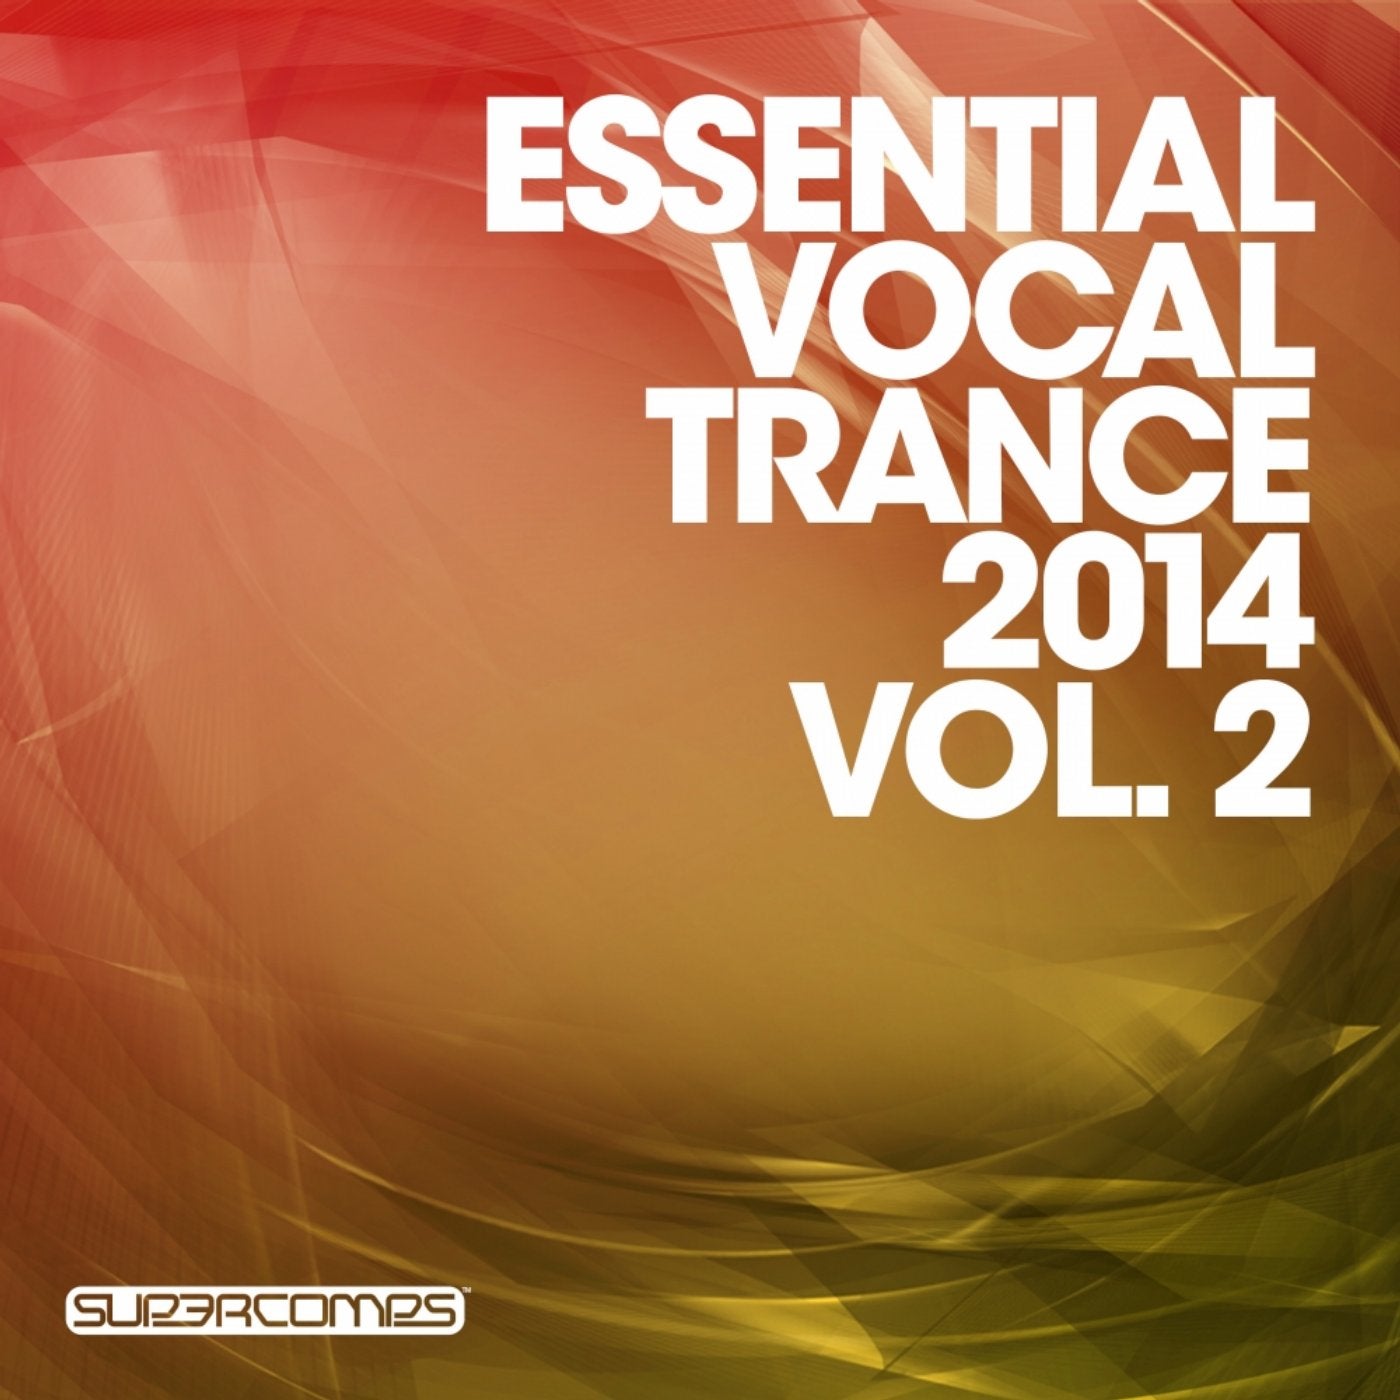 Essential Vocal Trance 2014 Vol. 2